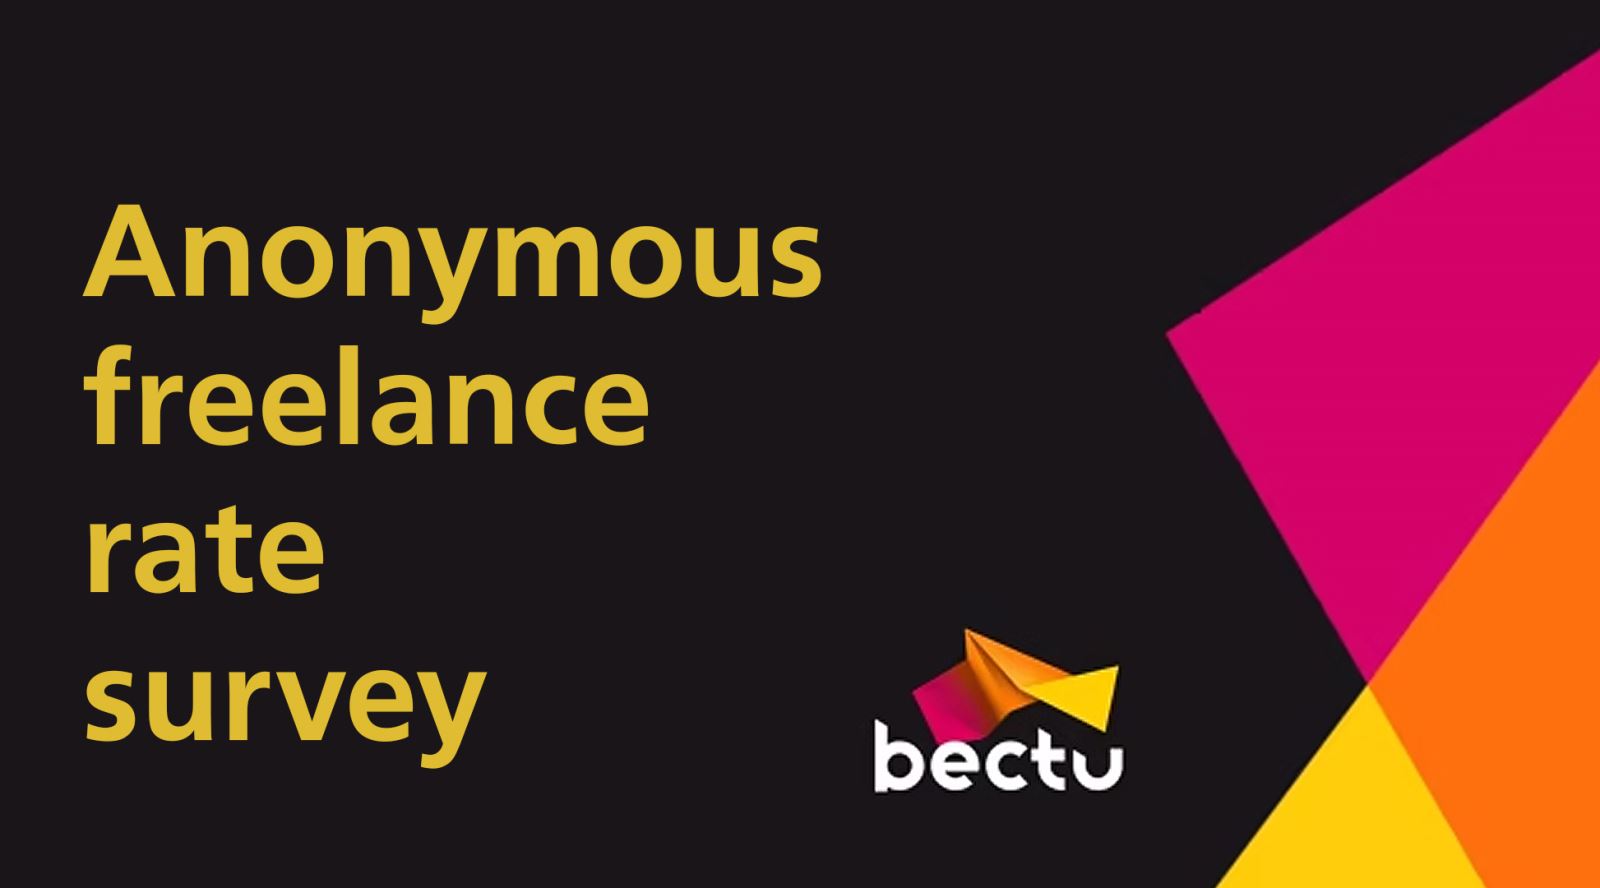 bectu - anonymous freelance rate survey